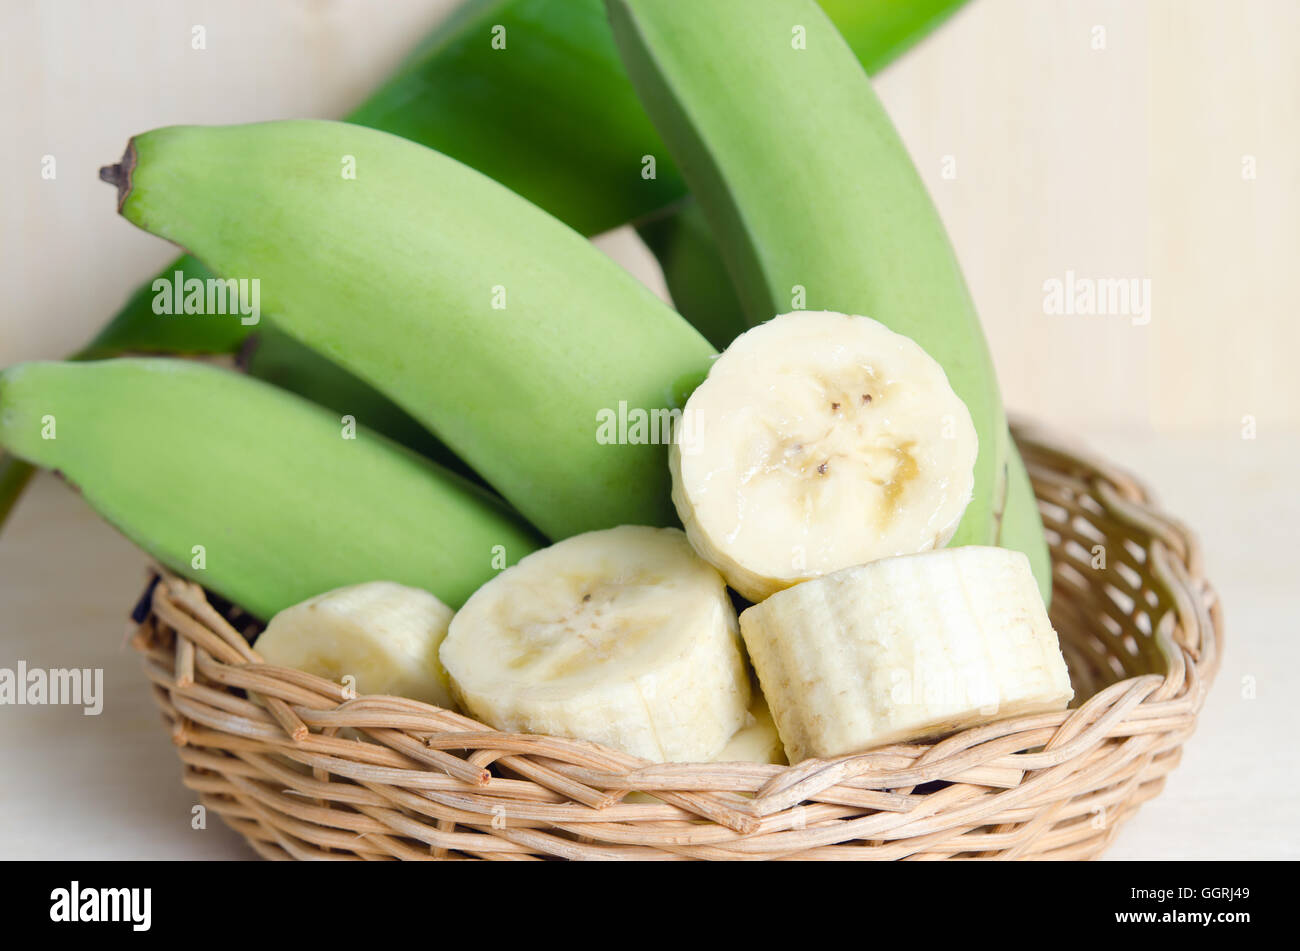 Banana (Other names are Musa banana acuminata, Musa balbisiana, and Musa x paradisiaca) fruit with leaf on basket Stock Photo